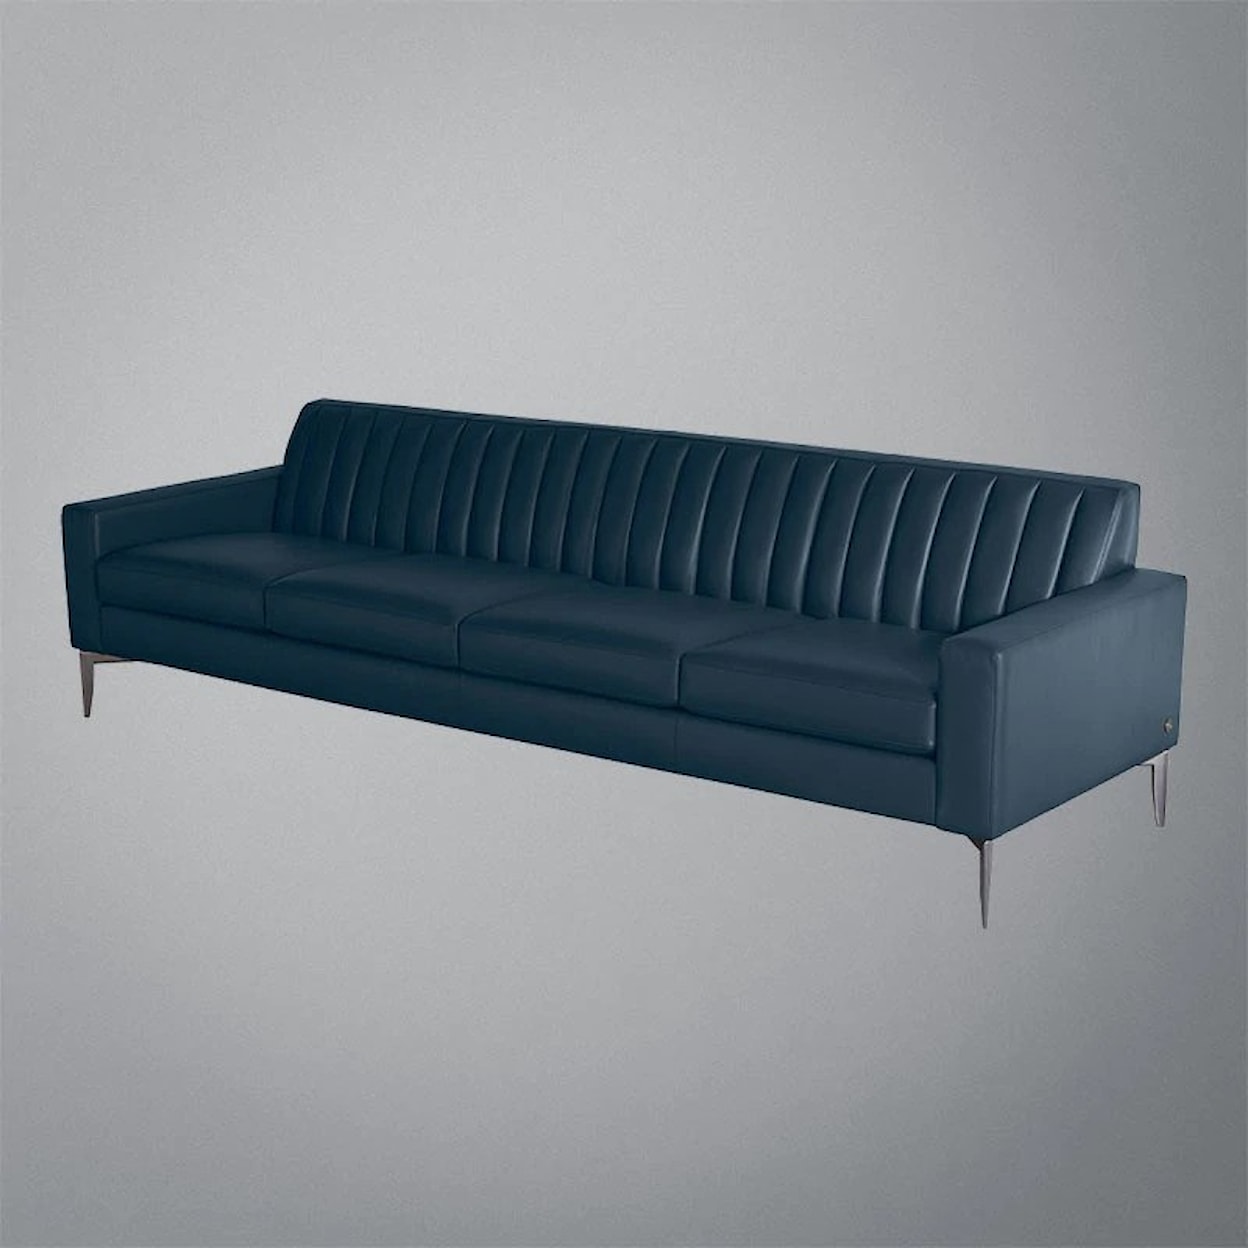 American Leather Rayna 4-Seat Sofa